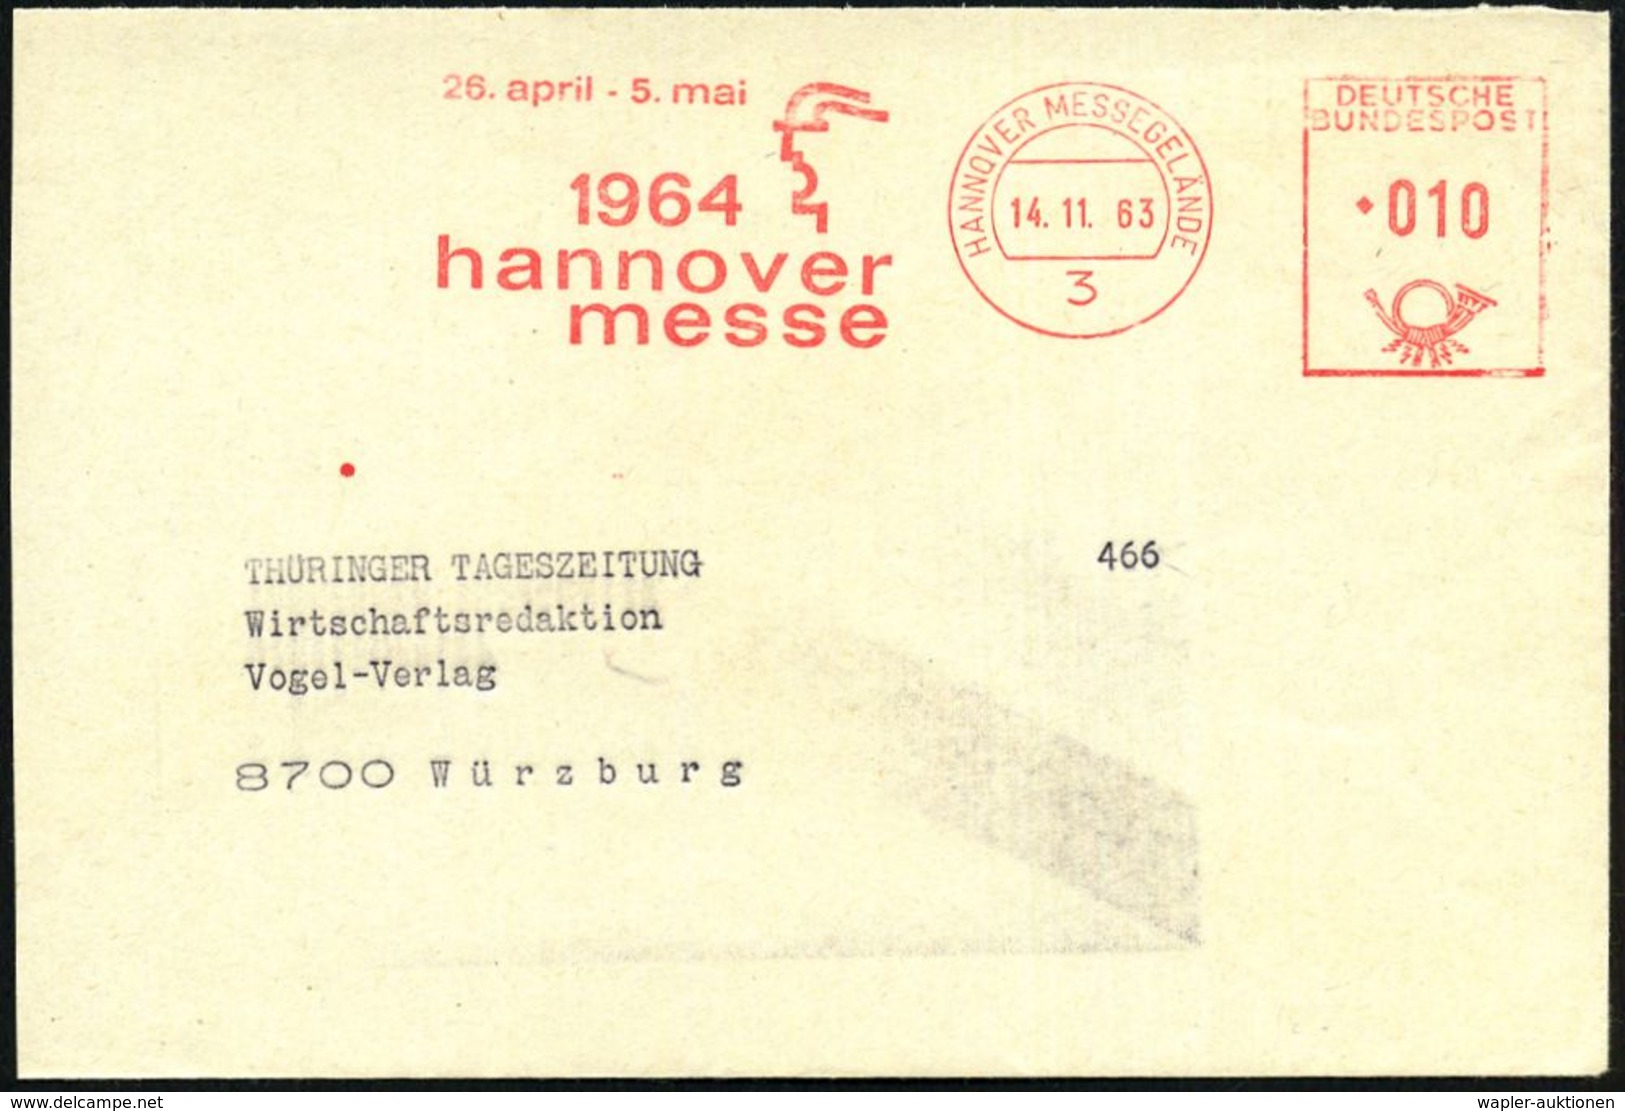 INTERNATIONALE MESSE HANNOVER : 3 HANNOVER MESSEGELÄNDE/ 26.april -5.mai/ 1964/ Hannover/ Messe 1963 (14.11.) AFS (Merku - Non Classés